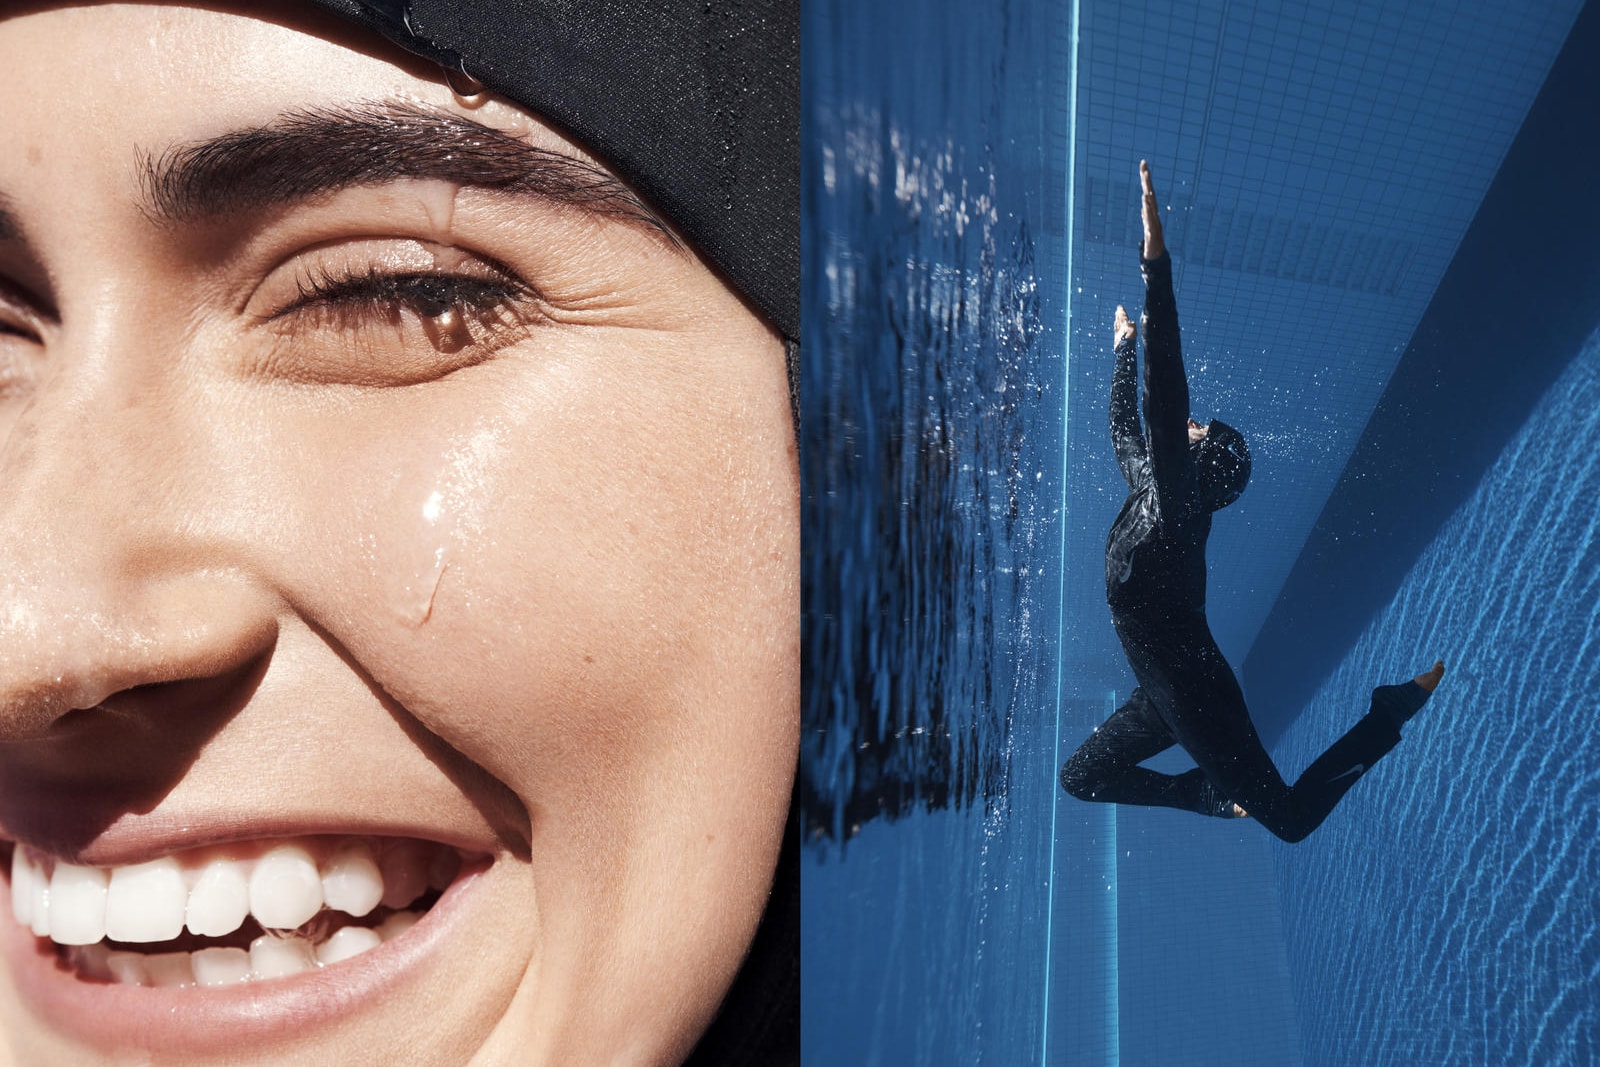 Nike Victory Women's Slim Full-Coverage Swimming Leggings. Nike SE